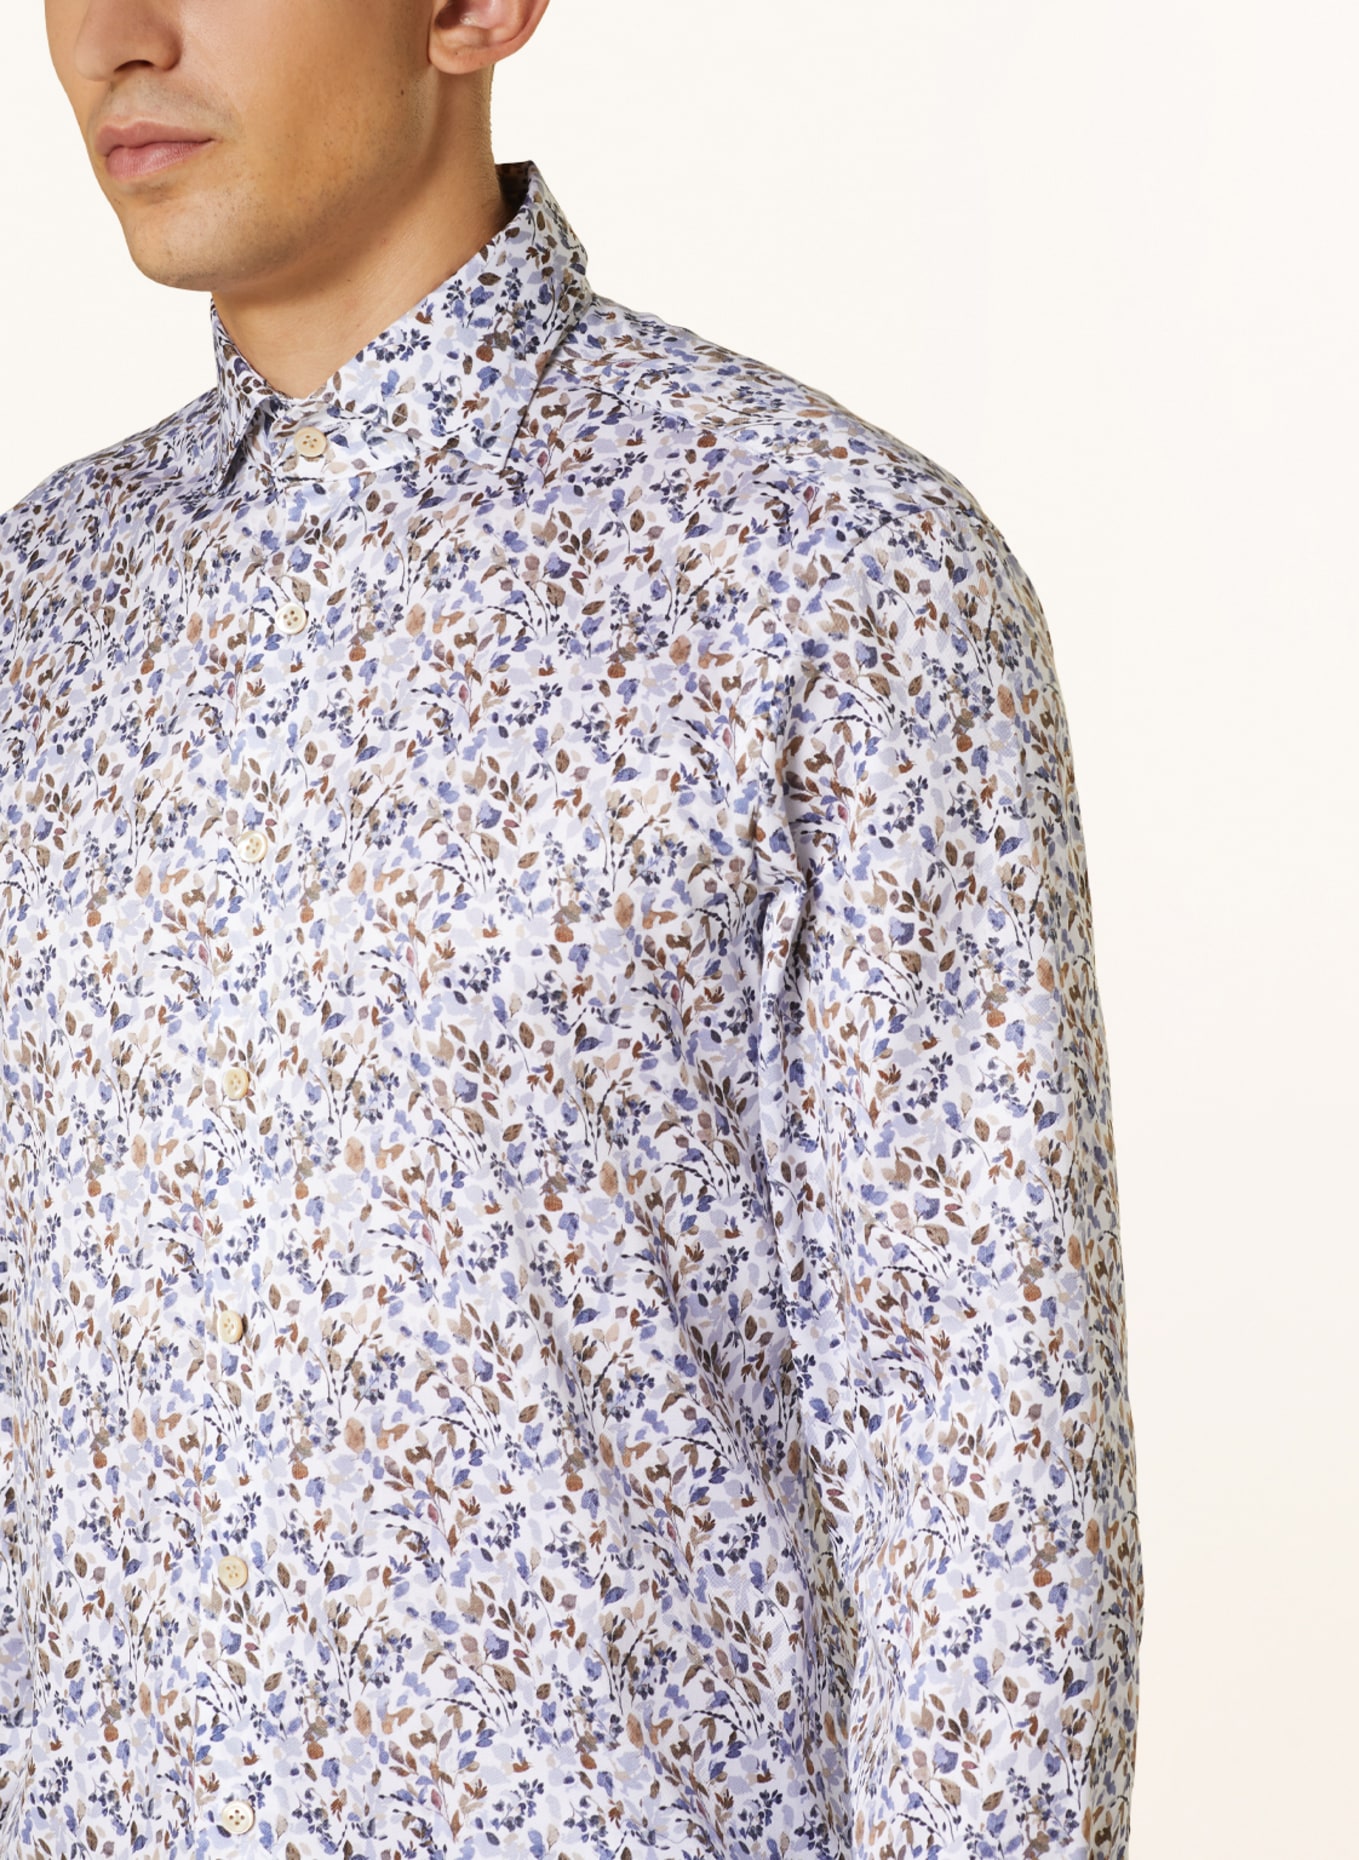 OLYMP SIGNATURE Hemd tailored fit, Farbe: WEISS/ BLAU (Bild 4)